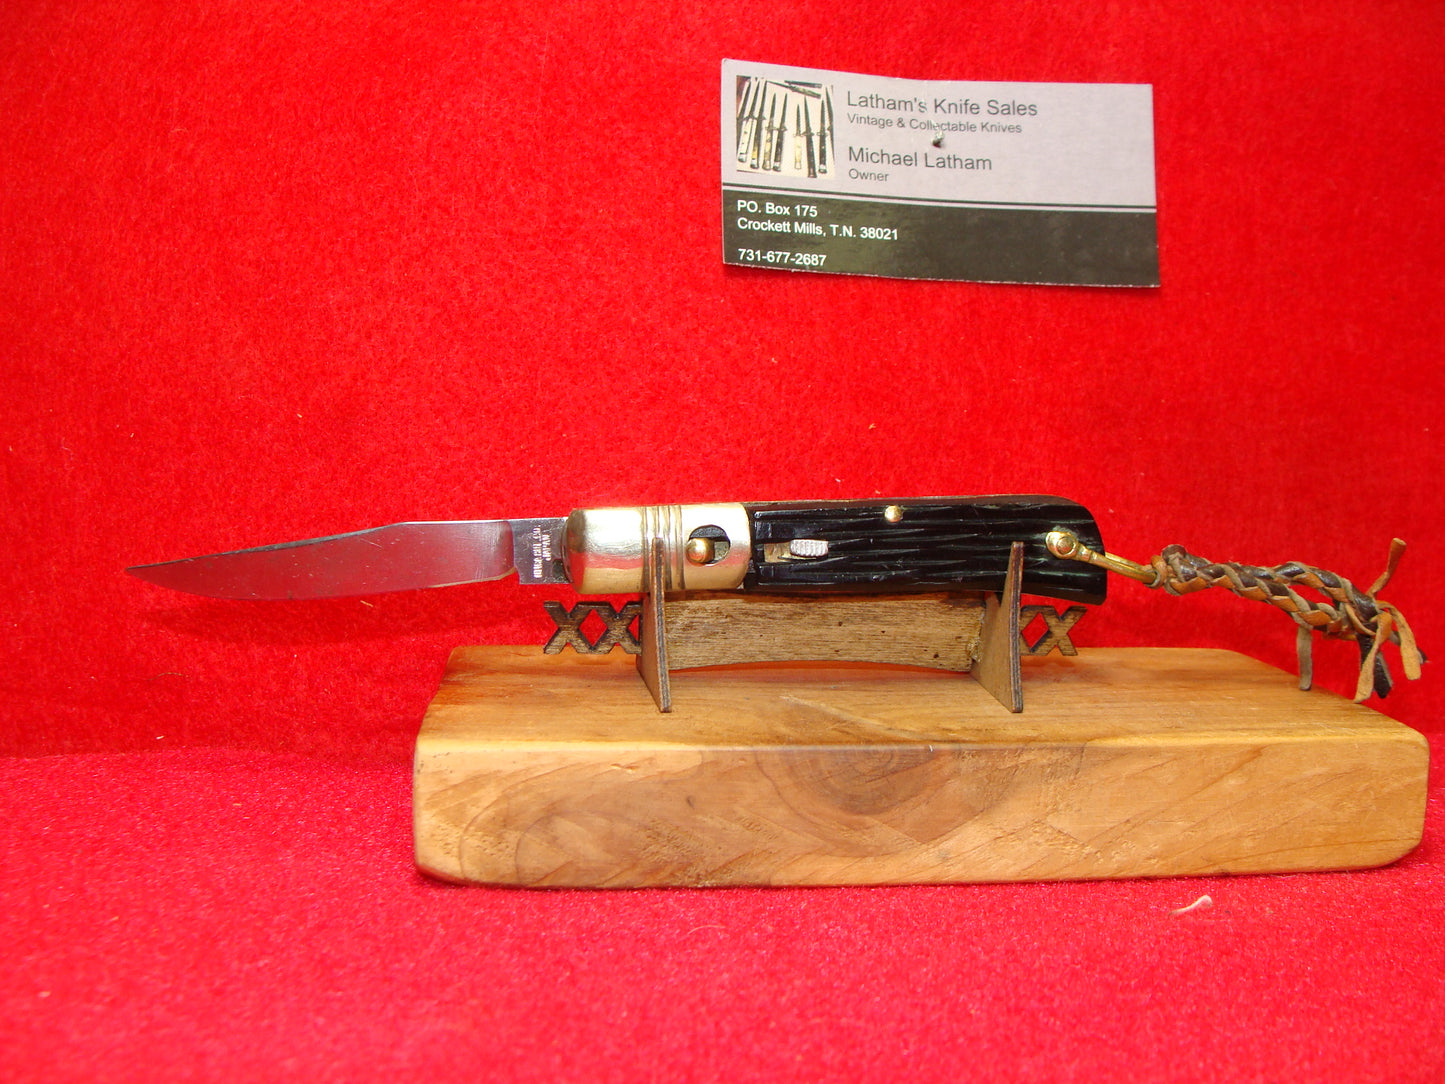 UTICA CUT CO. JAPAN 1950-56 BO/BC SMALL HUNTER JAPAN AUTOMATIC VINTAGE AMERICAN AUTOMATIC KNIFE BLACK BONE HANDLES